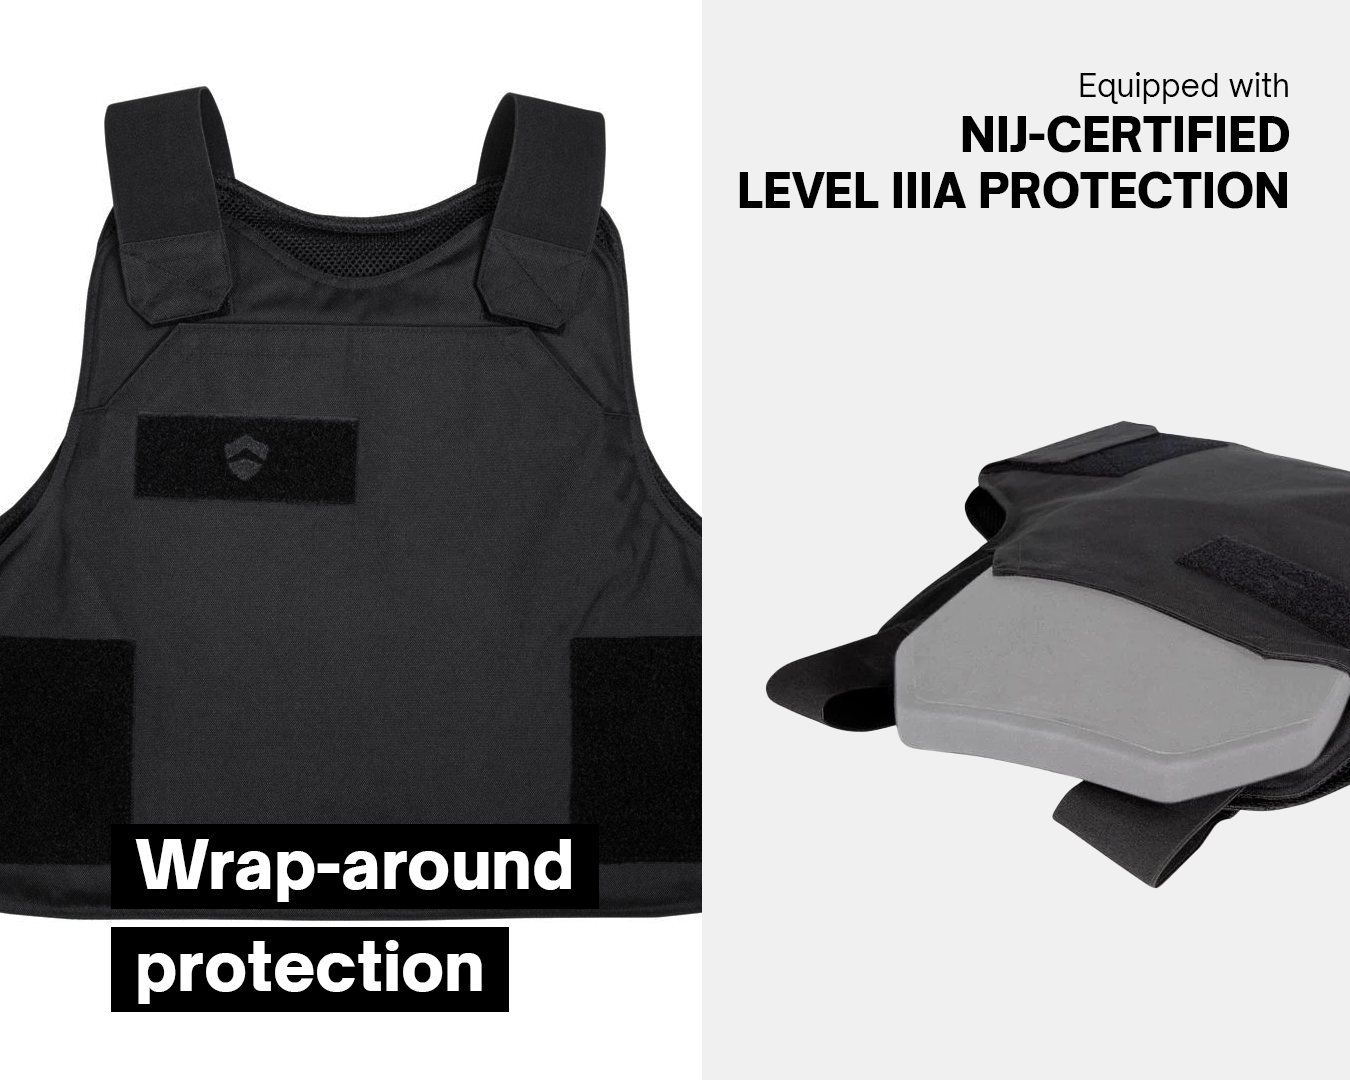 VP3 Vest Equipped with NIJ-Certified Level IIIA Protection